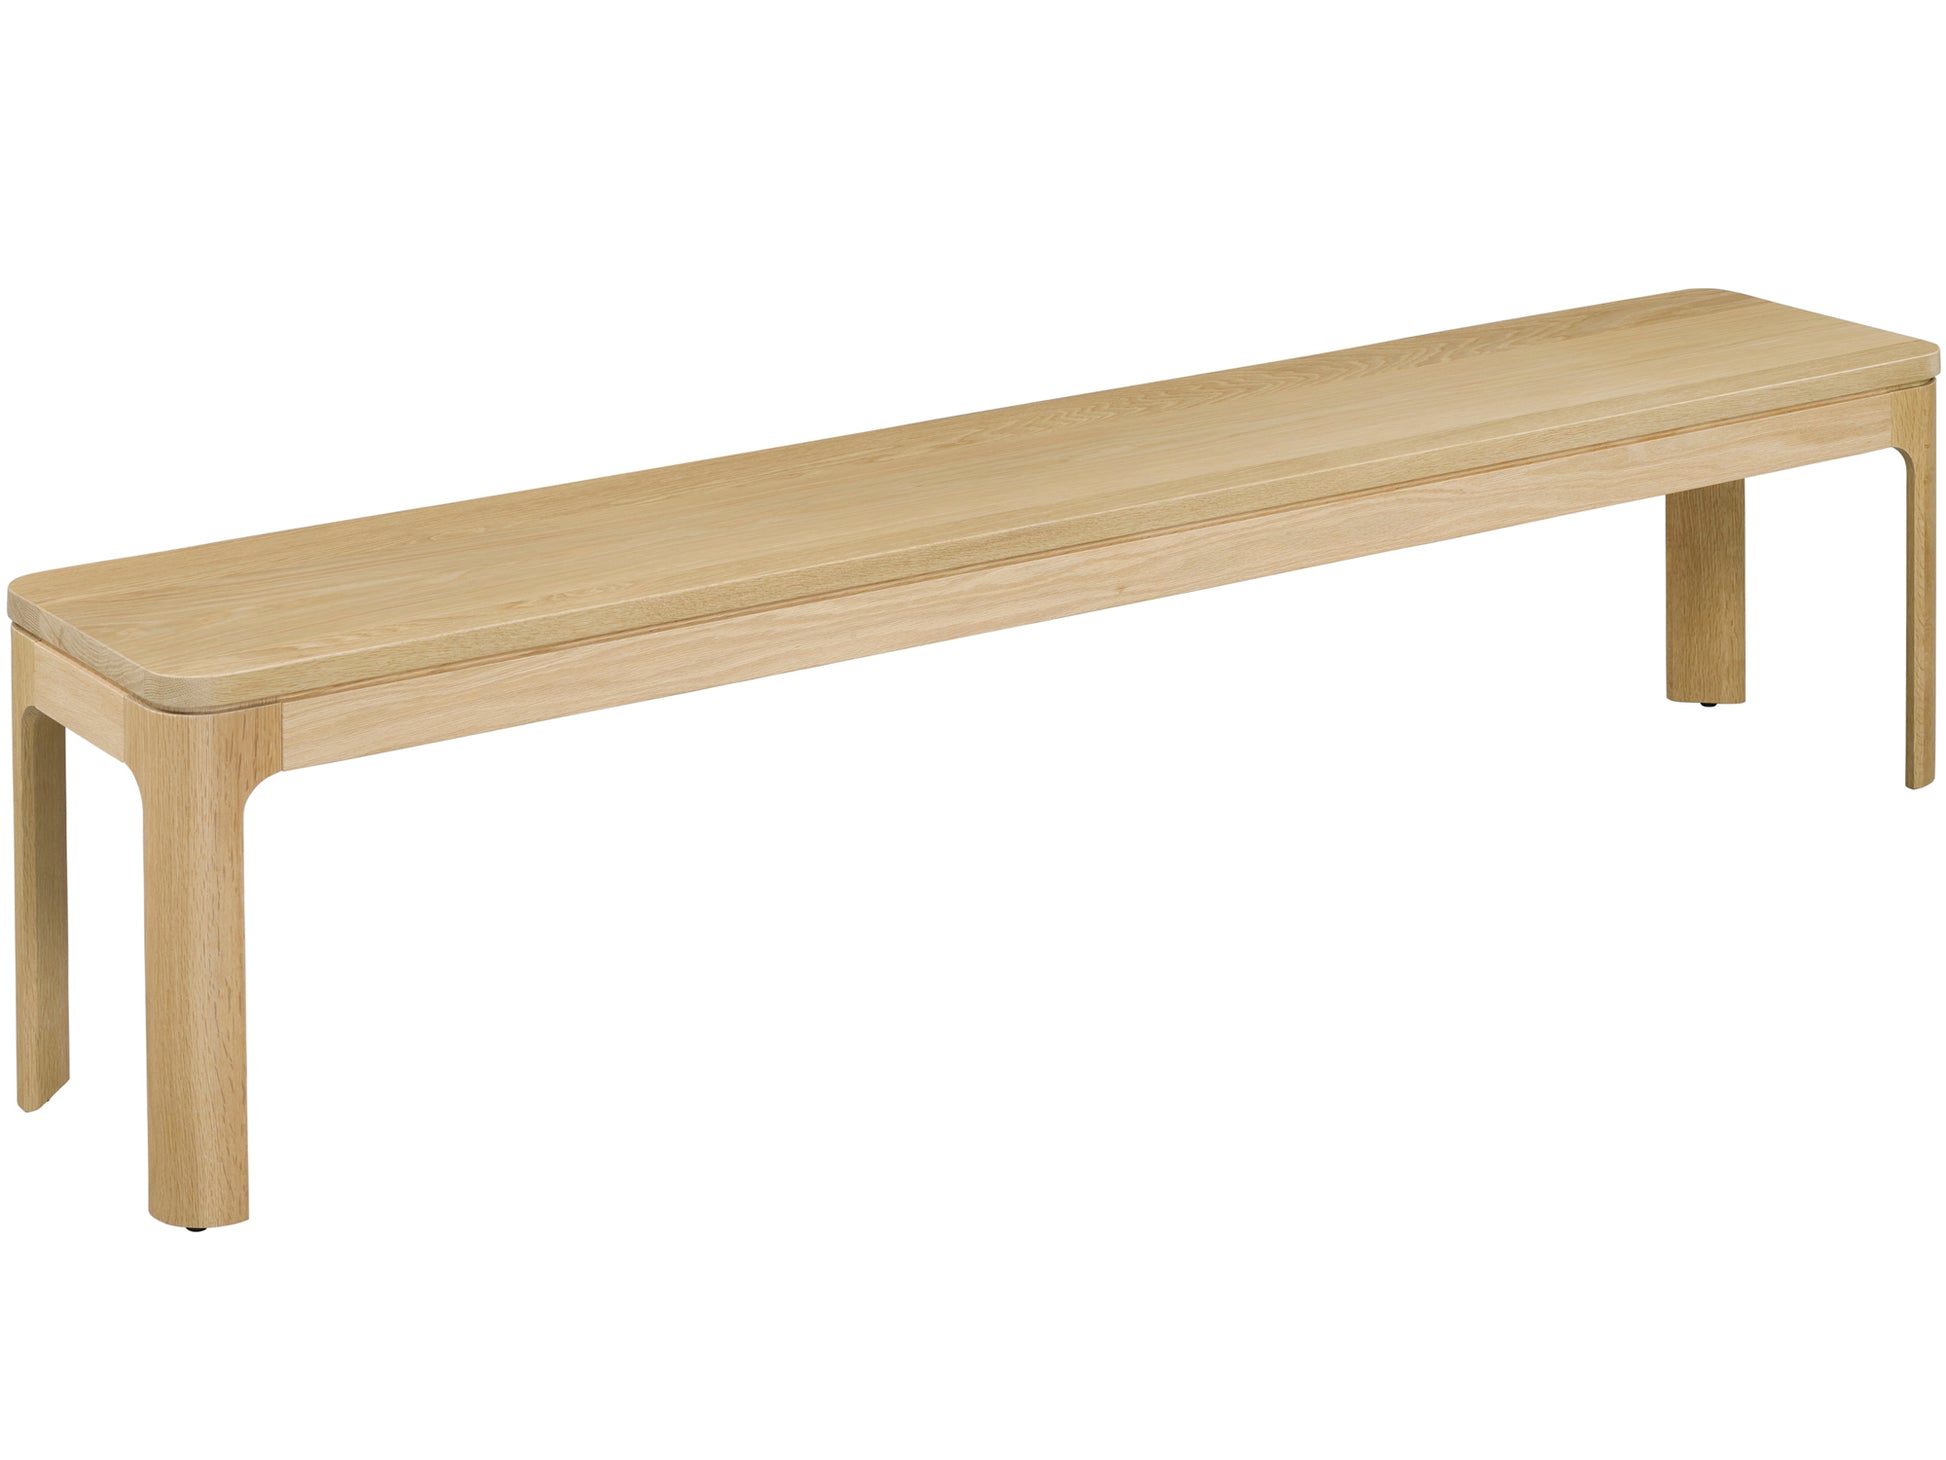 Naasko Bench, solid wood, Canadian made, custom, made furniture.